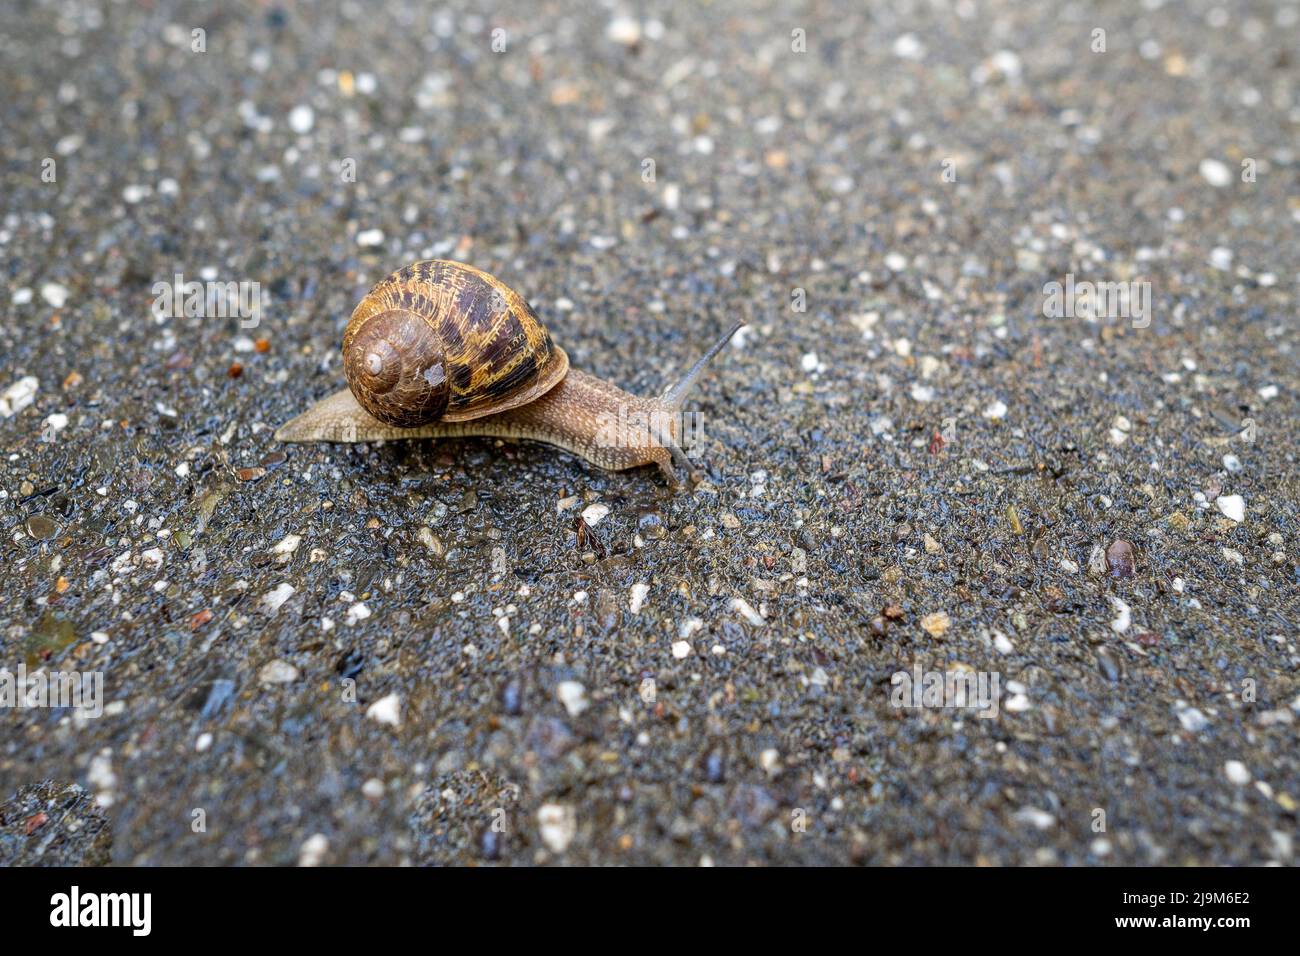 A common garden snail, Cornu aspersum, on the sidewalk, with plenty of space for copy Stock Photo